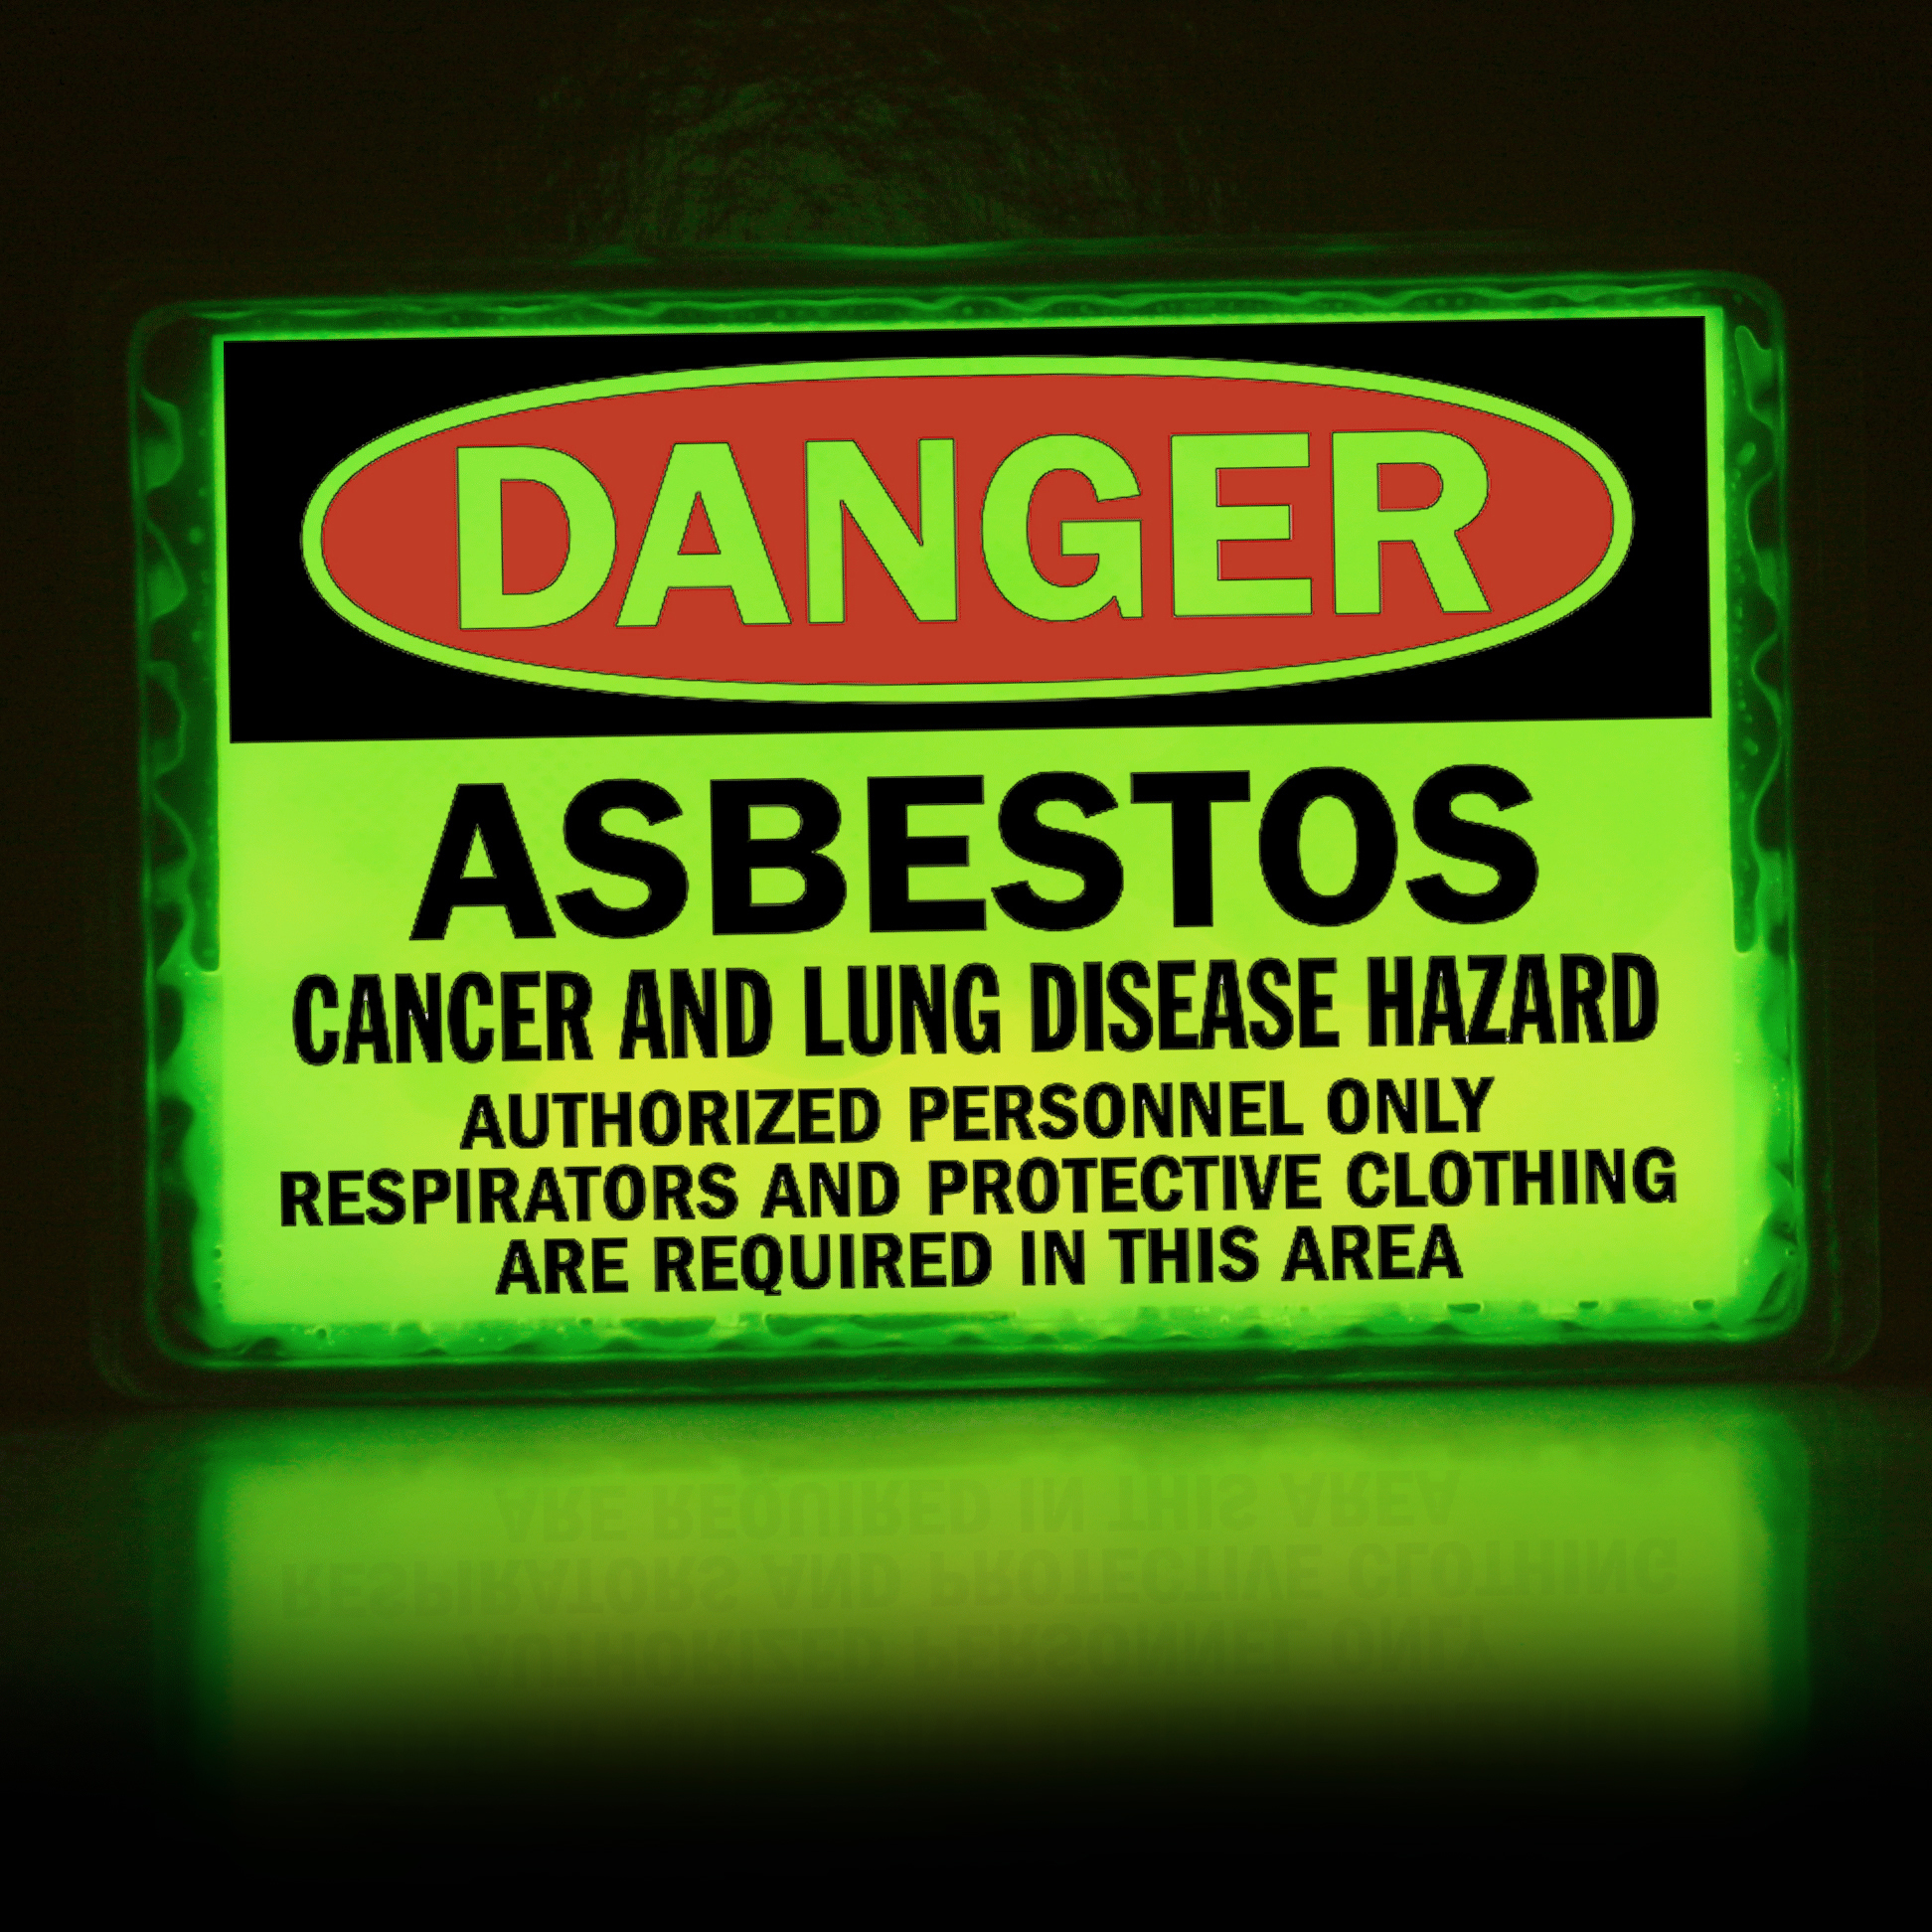 Asbestos safety sign